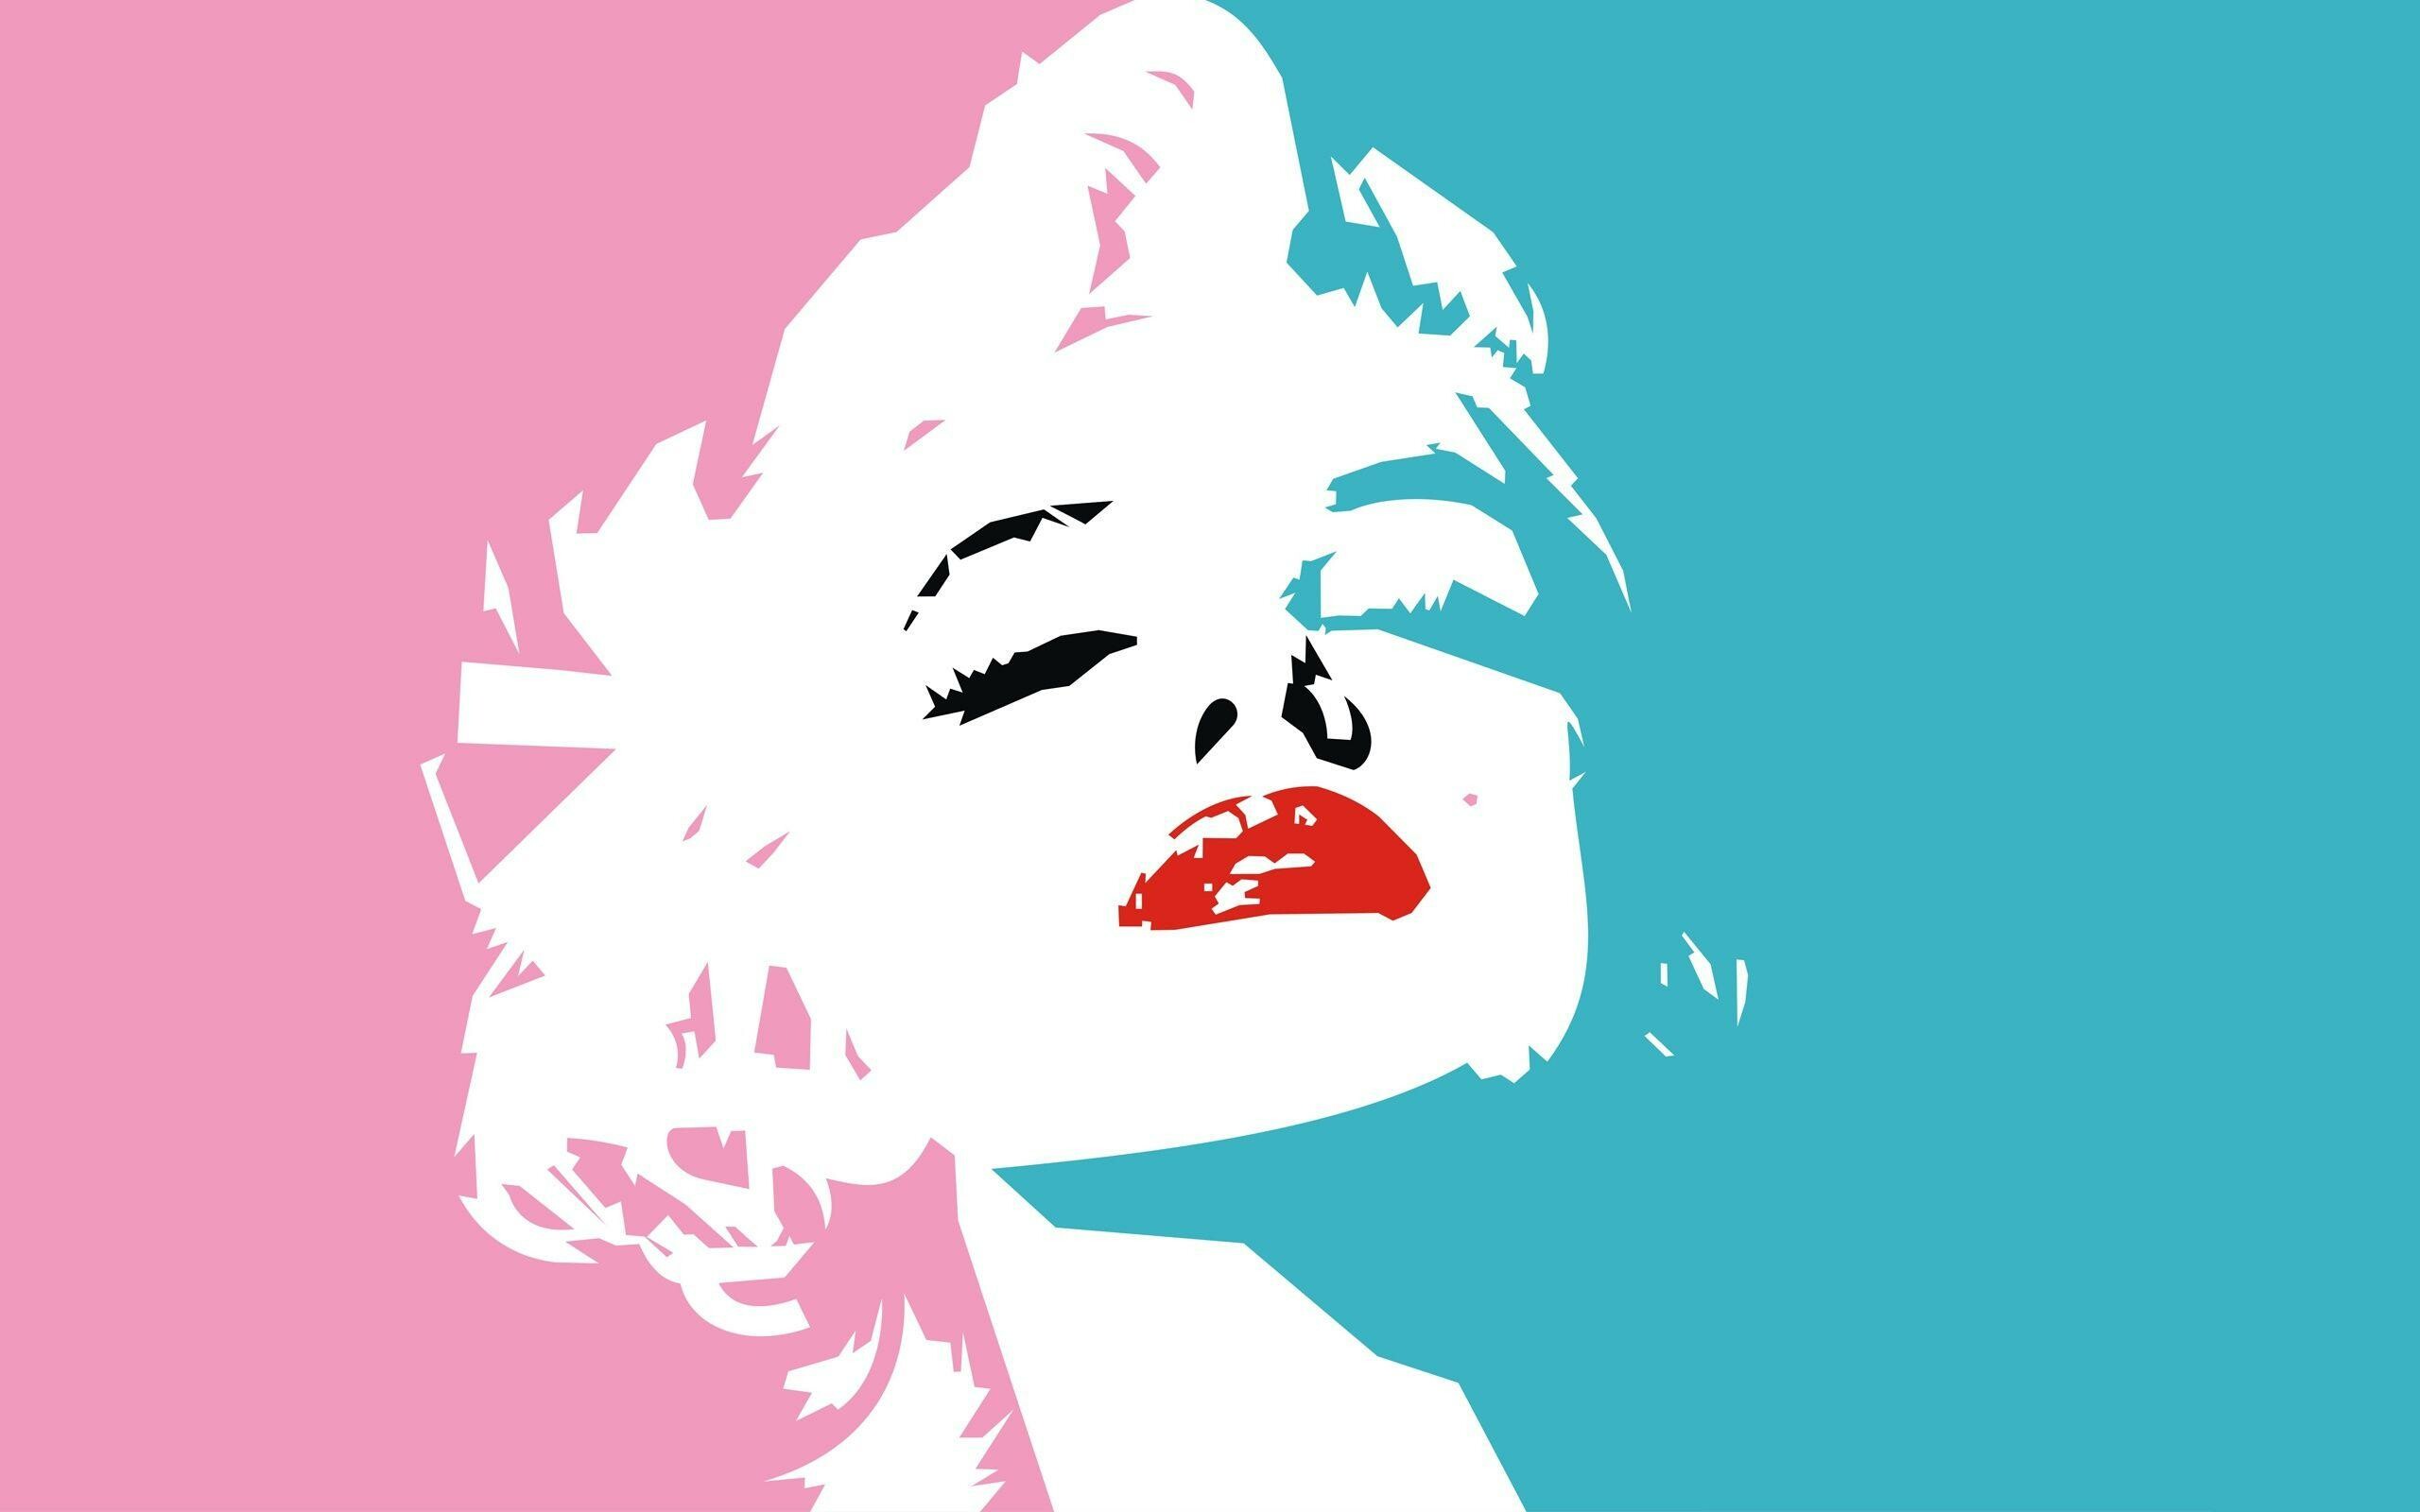 Pop Art: A deconstruction of images seen in popular culture, Marilyn Monroe. 2560x1600 HD Wallpaper.